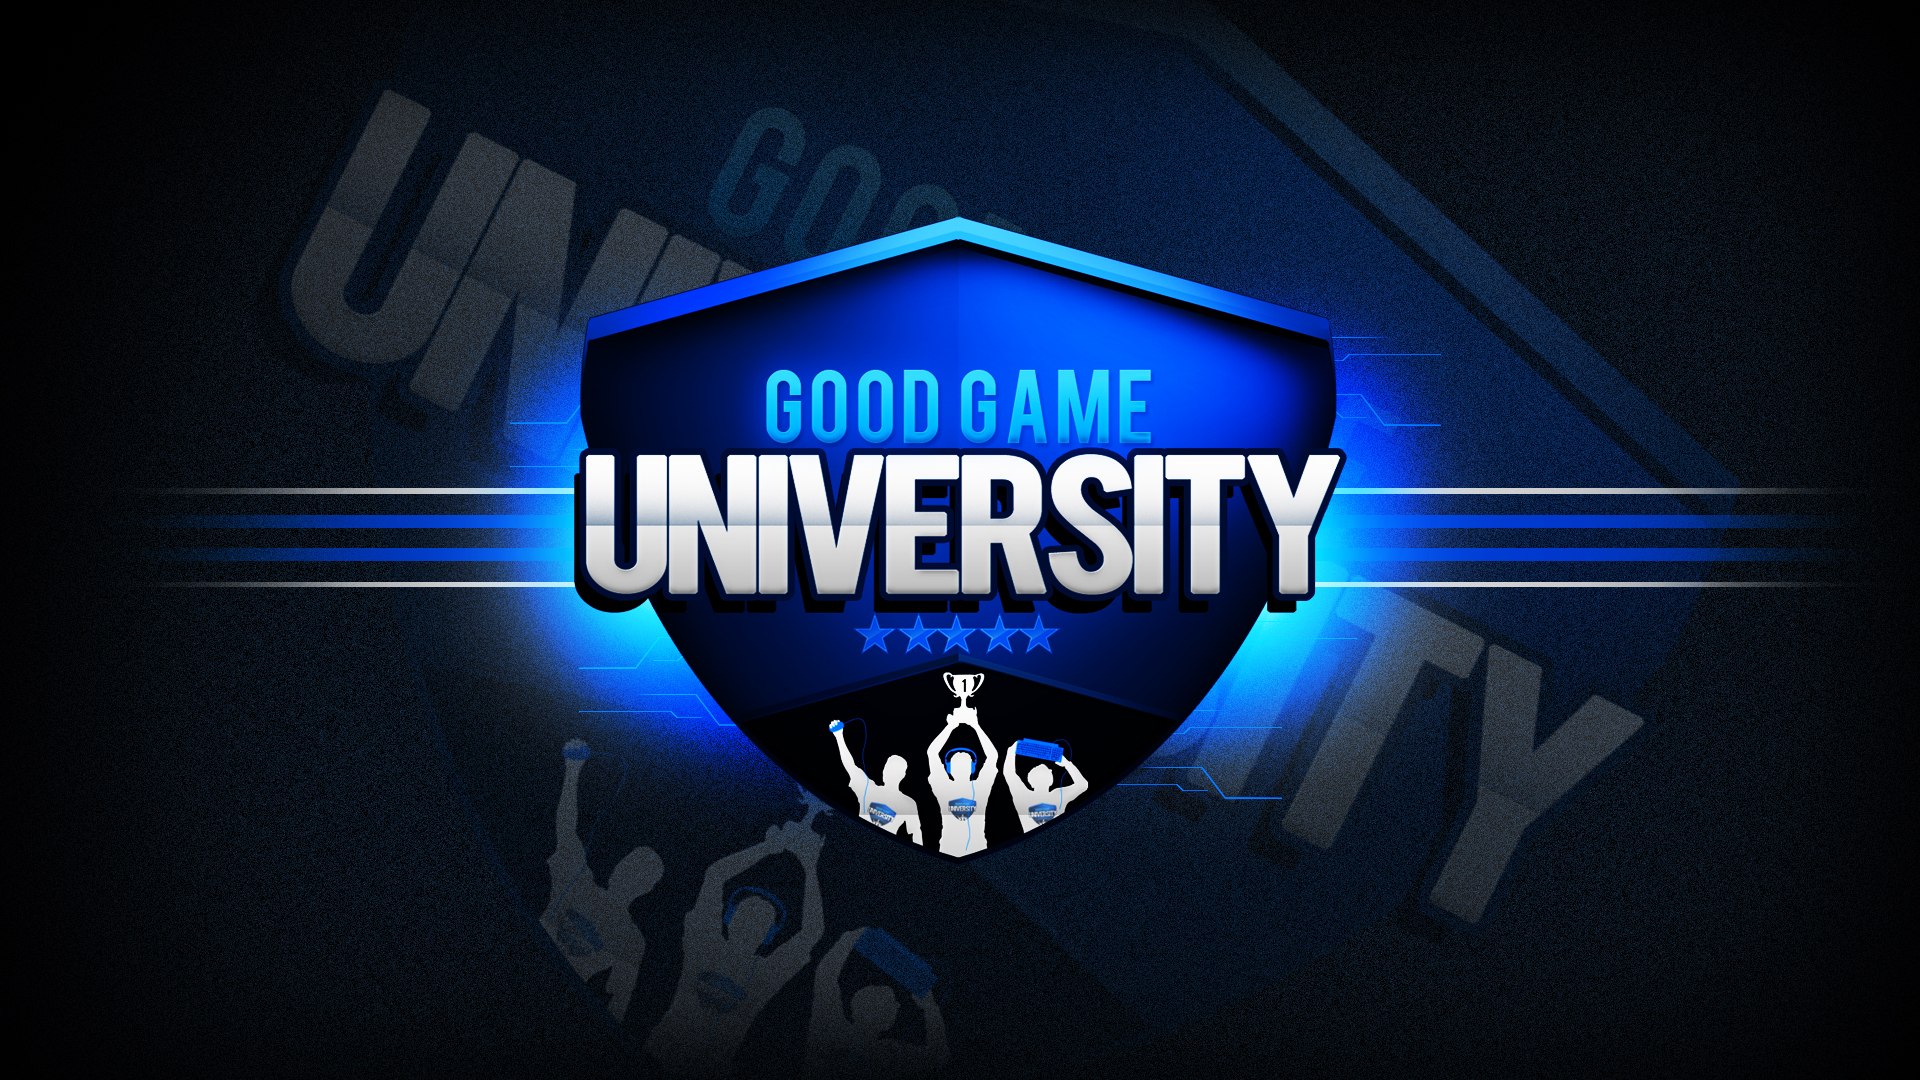 Good Game University